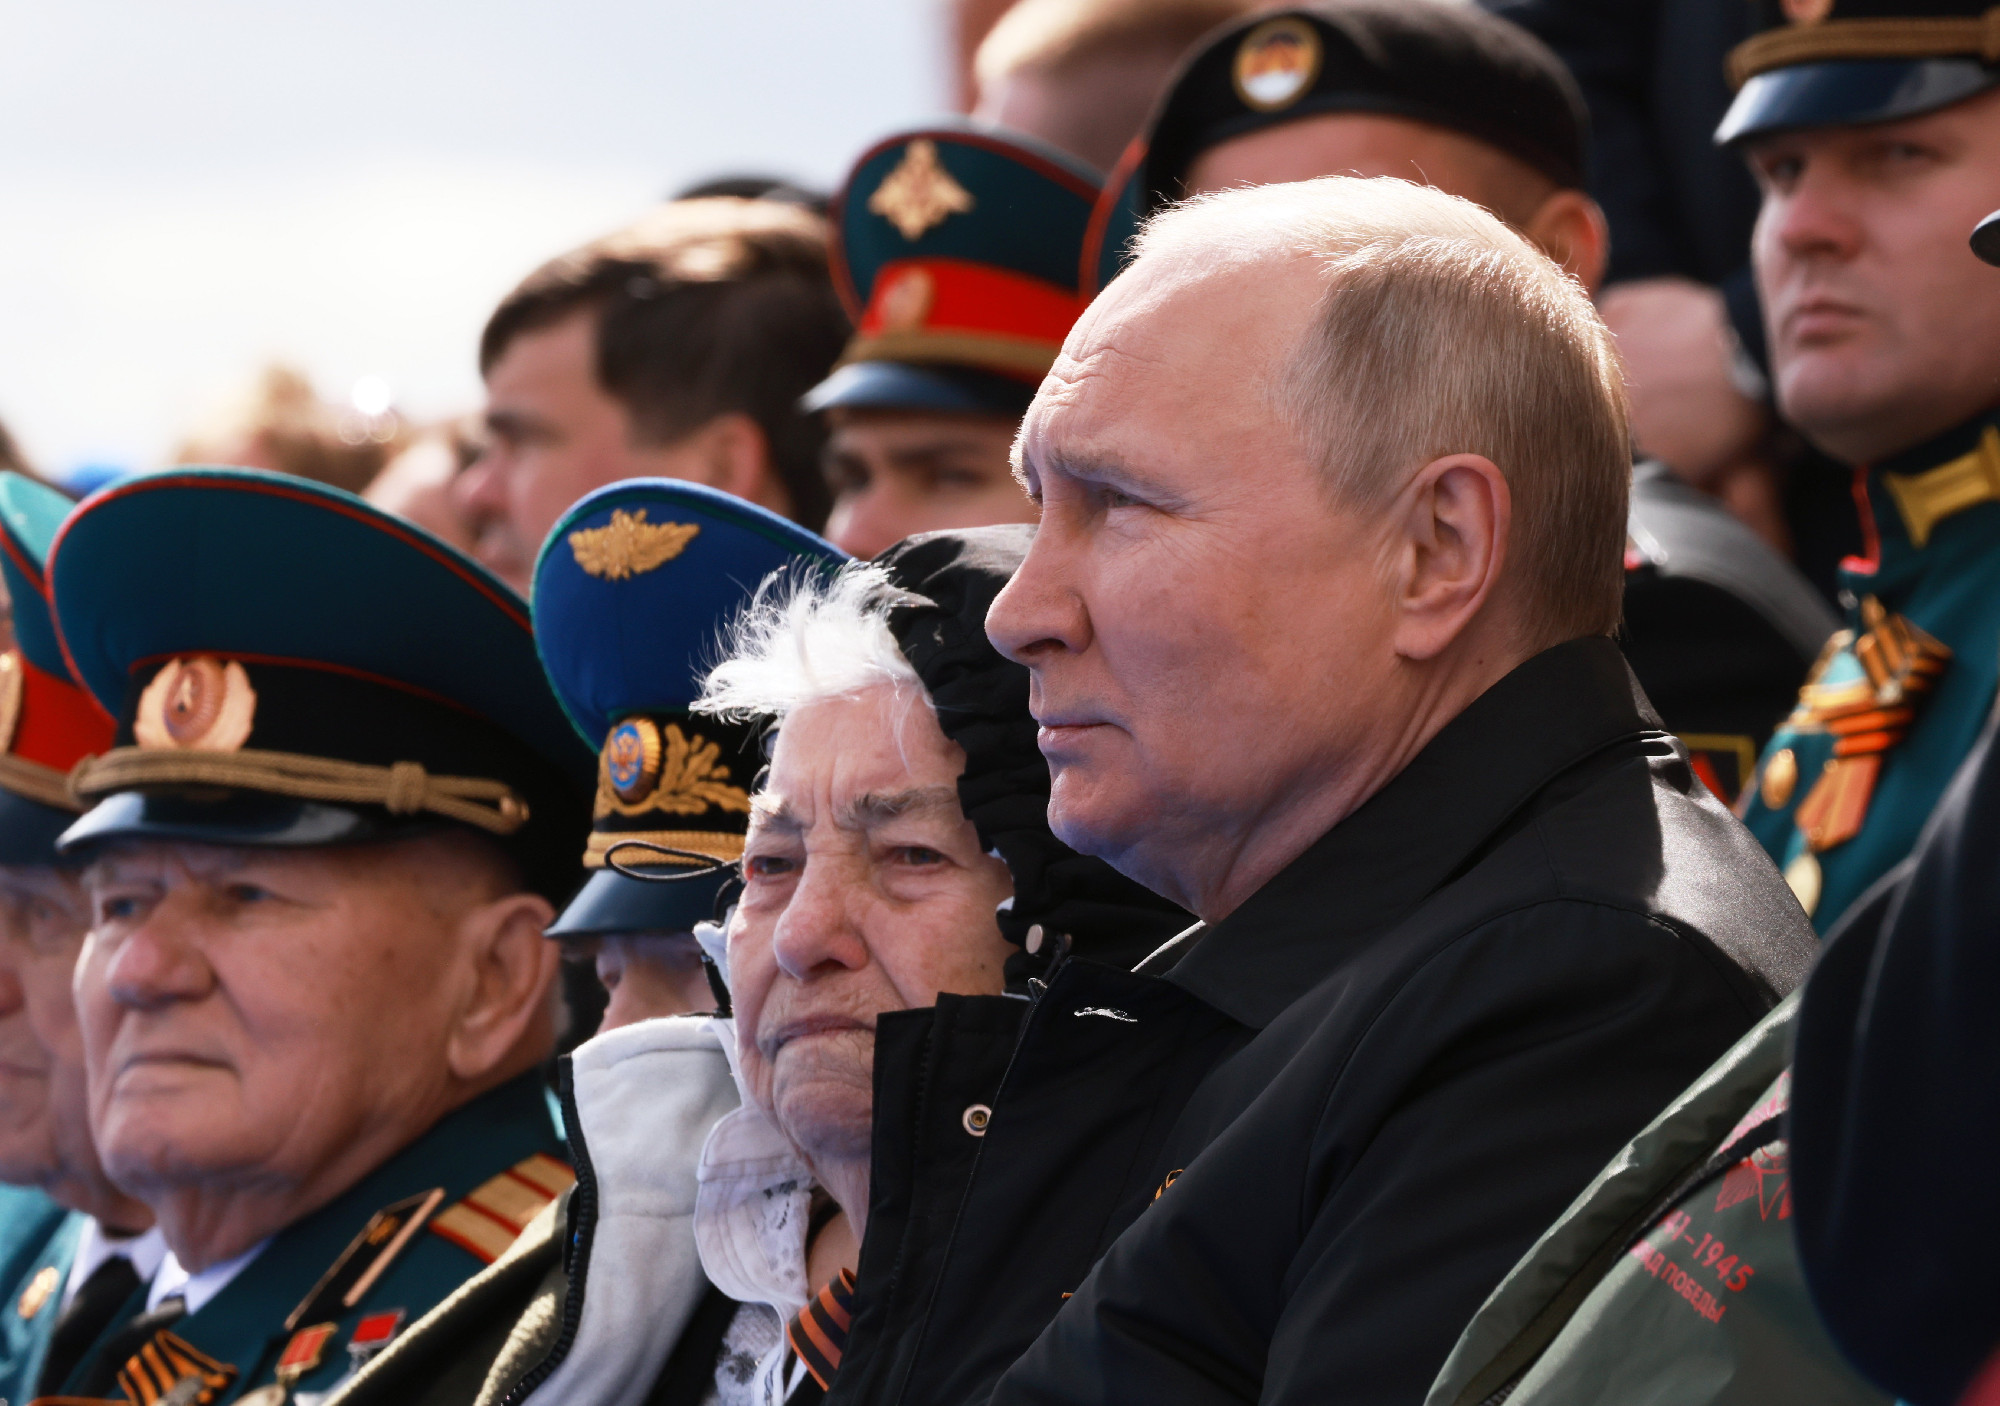 Üres kézzel jött Putyin, de valamit mutatnia kell majd